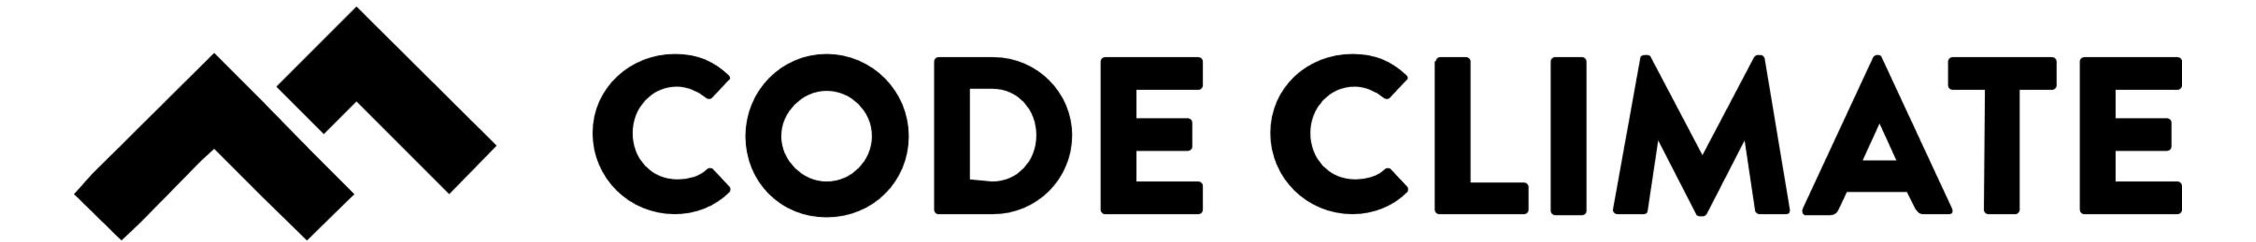 Code_Climate_Logo